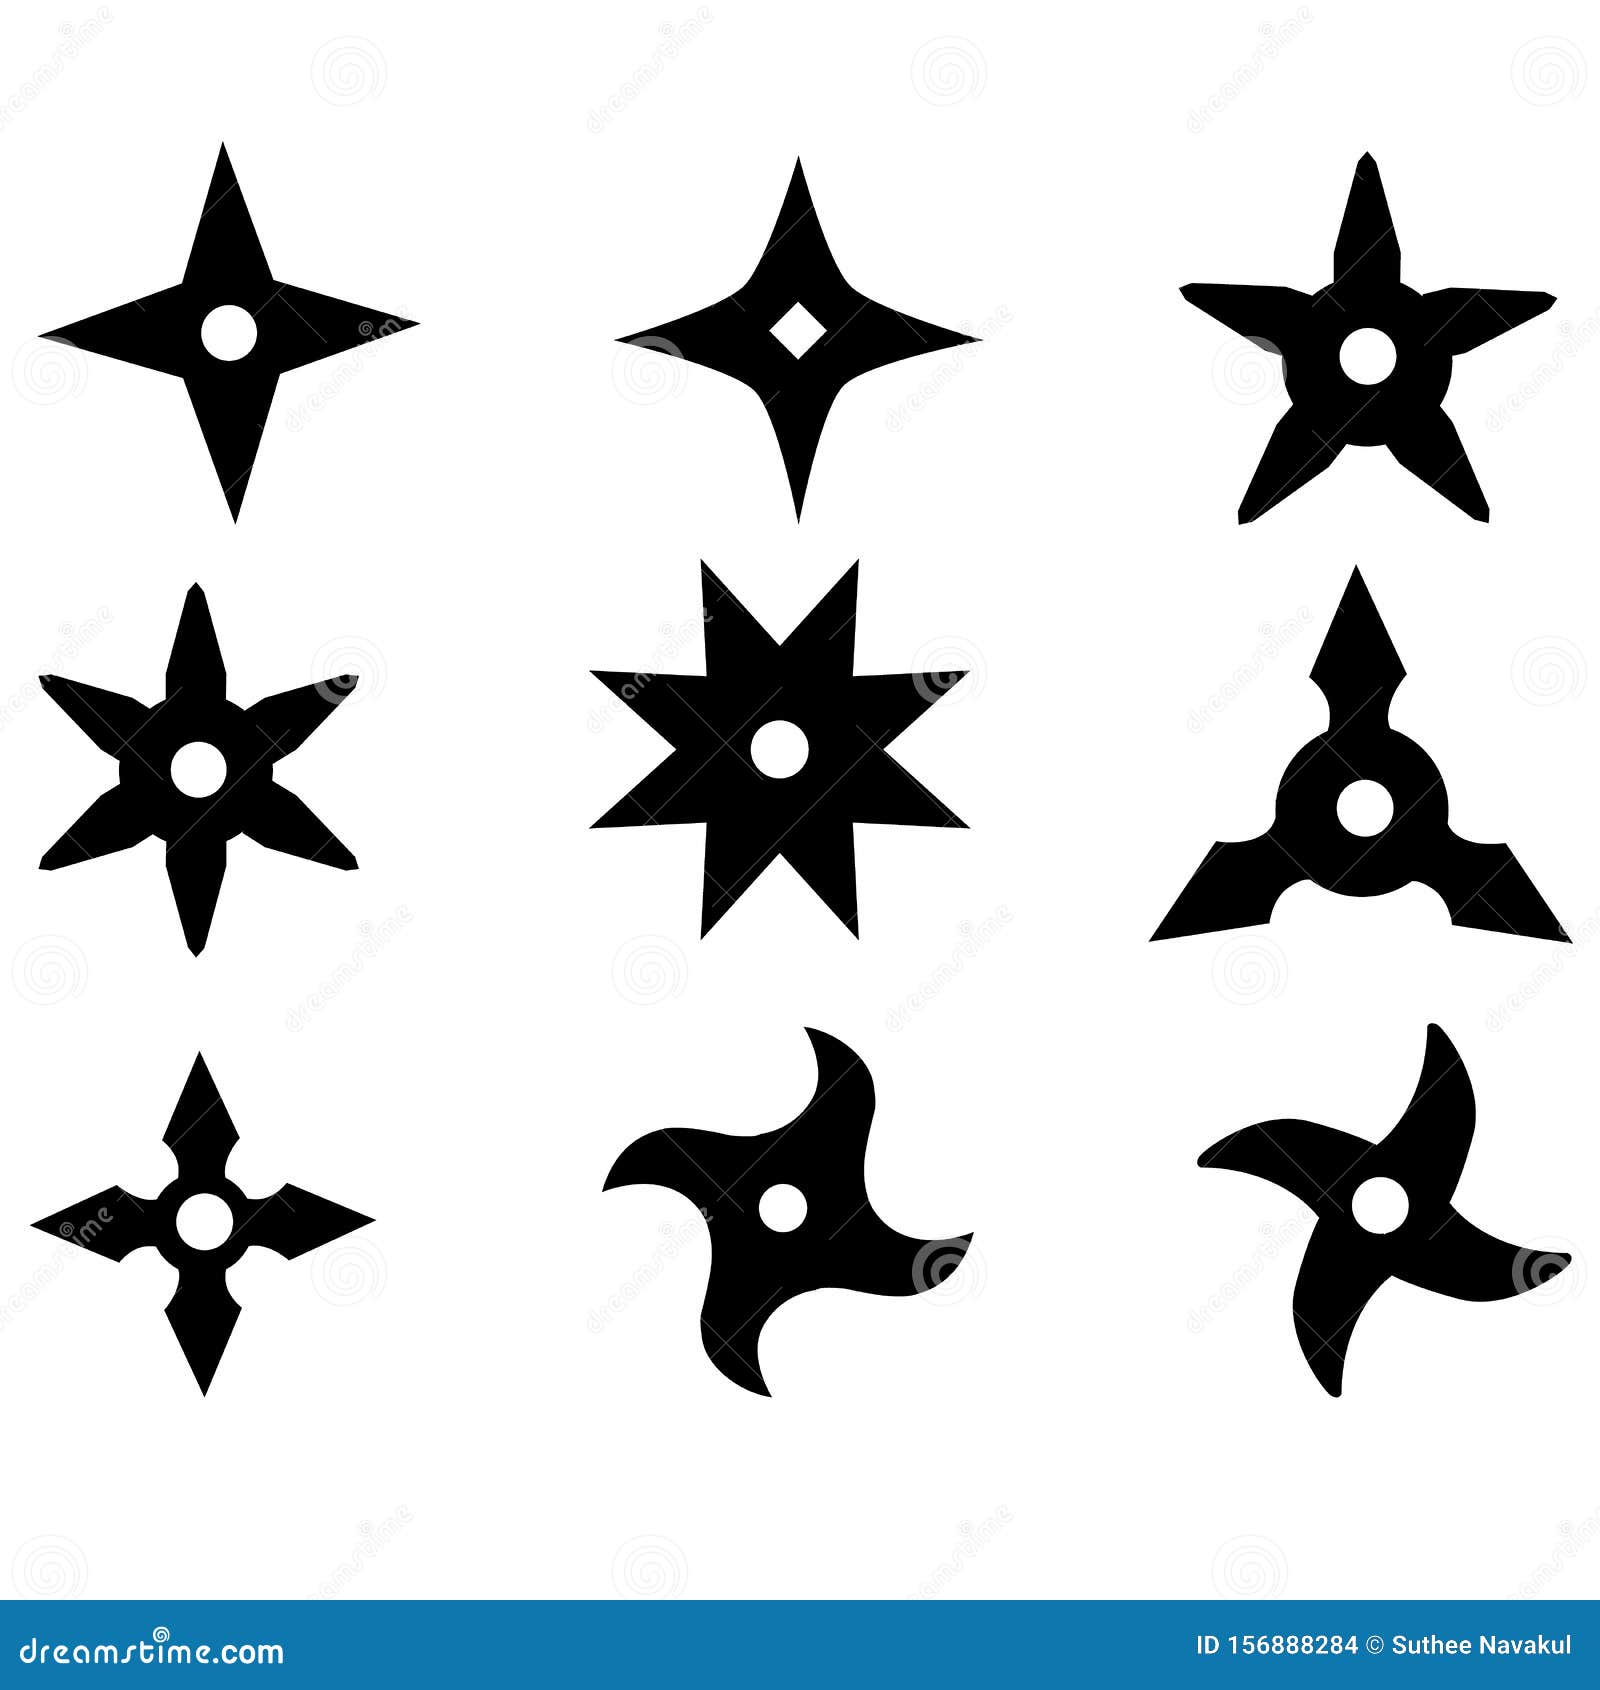 https://thumbs.dreamstime.com/z/ninja-stars-icon-white-background-flat-style-shuriken-throwing-star-your-web-site-design-logo-game-app-ui-ninjas-symbol-156888284.jpg